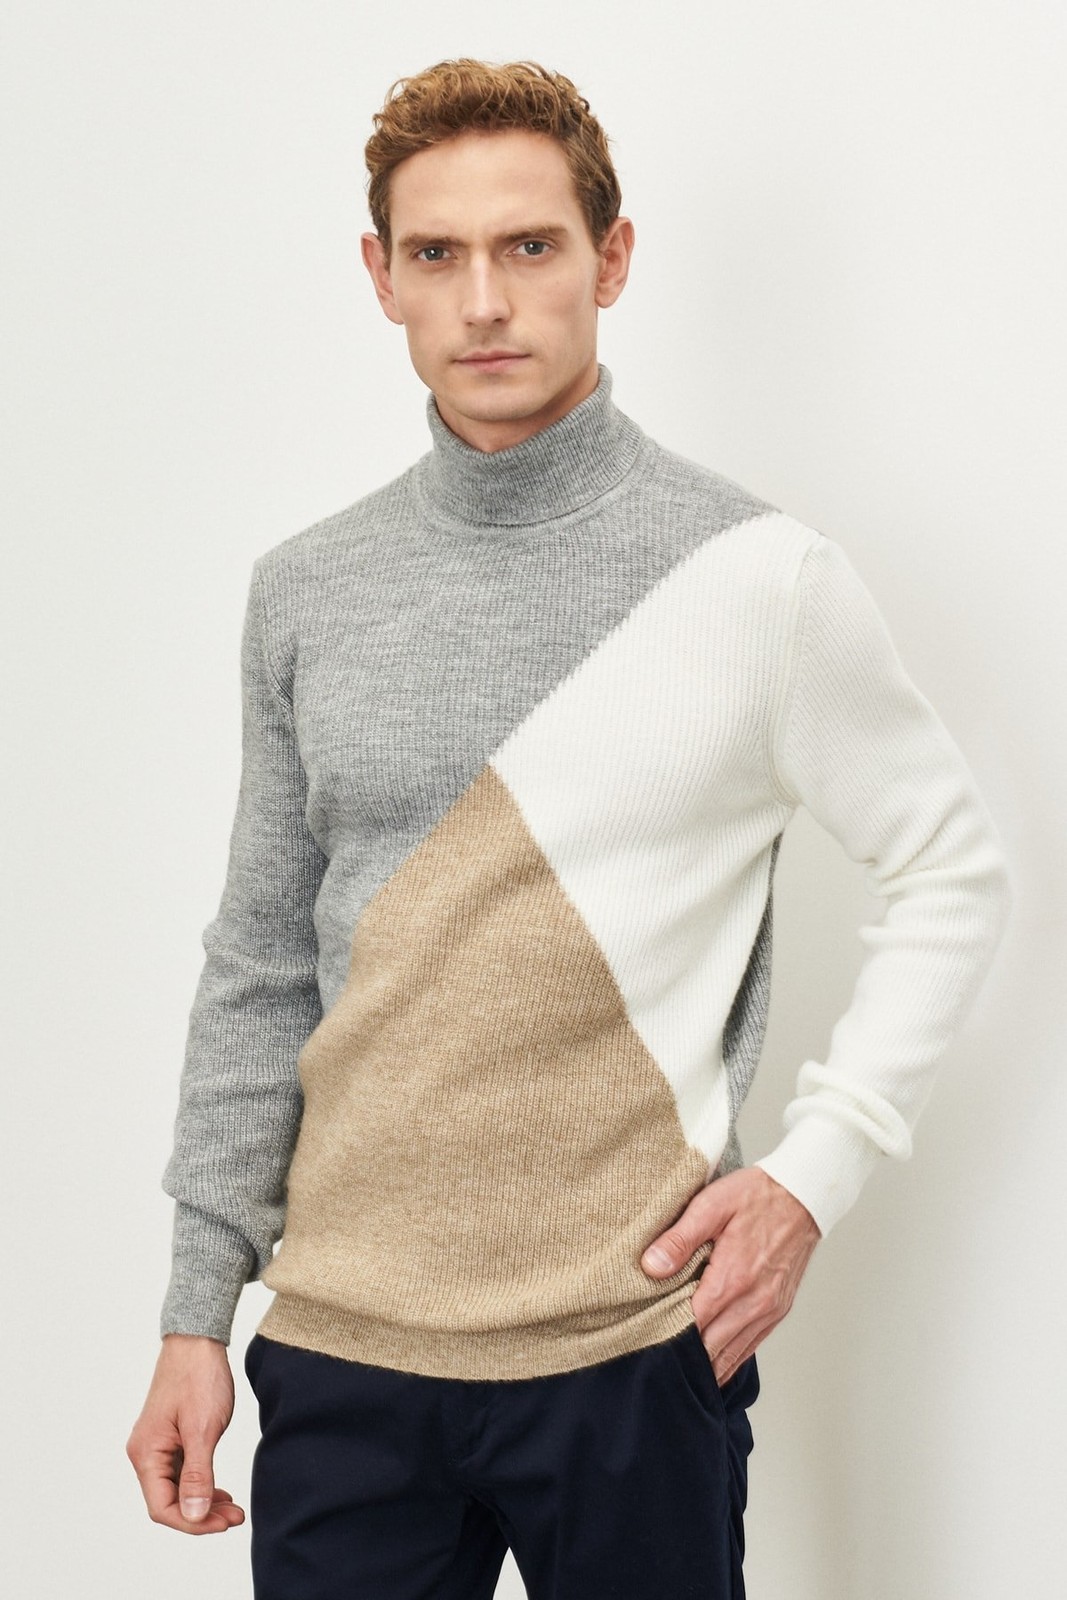 ALTINYILDIZ CLASSICS Men's Beige-gray Standard Fit Regular Cut Full Turtleneck Ruffled Soft Textured Knitwear Sweater